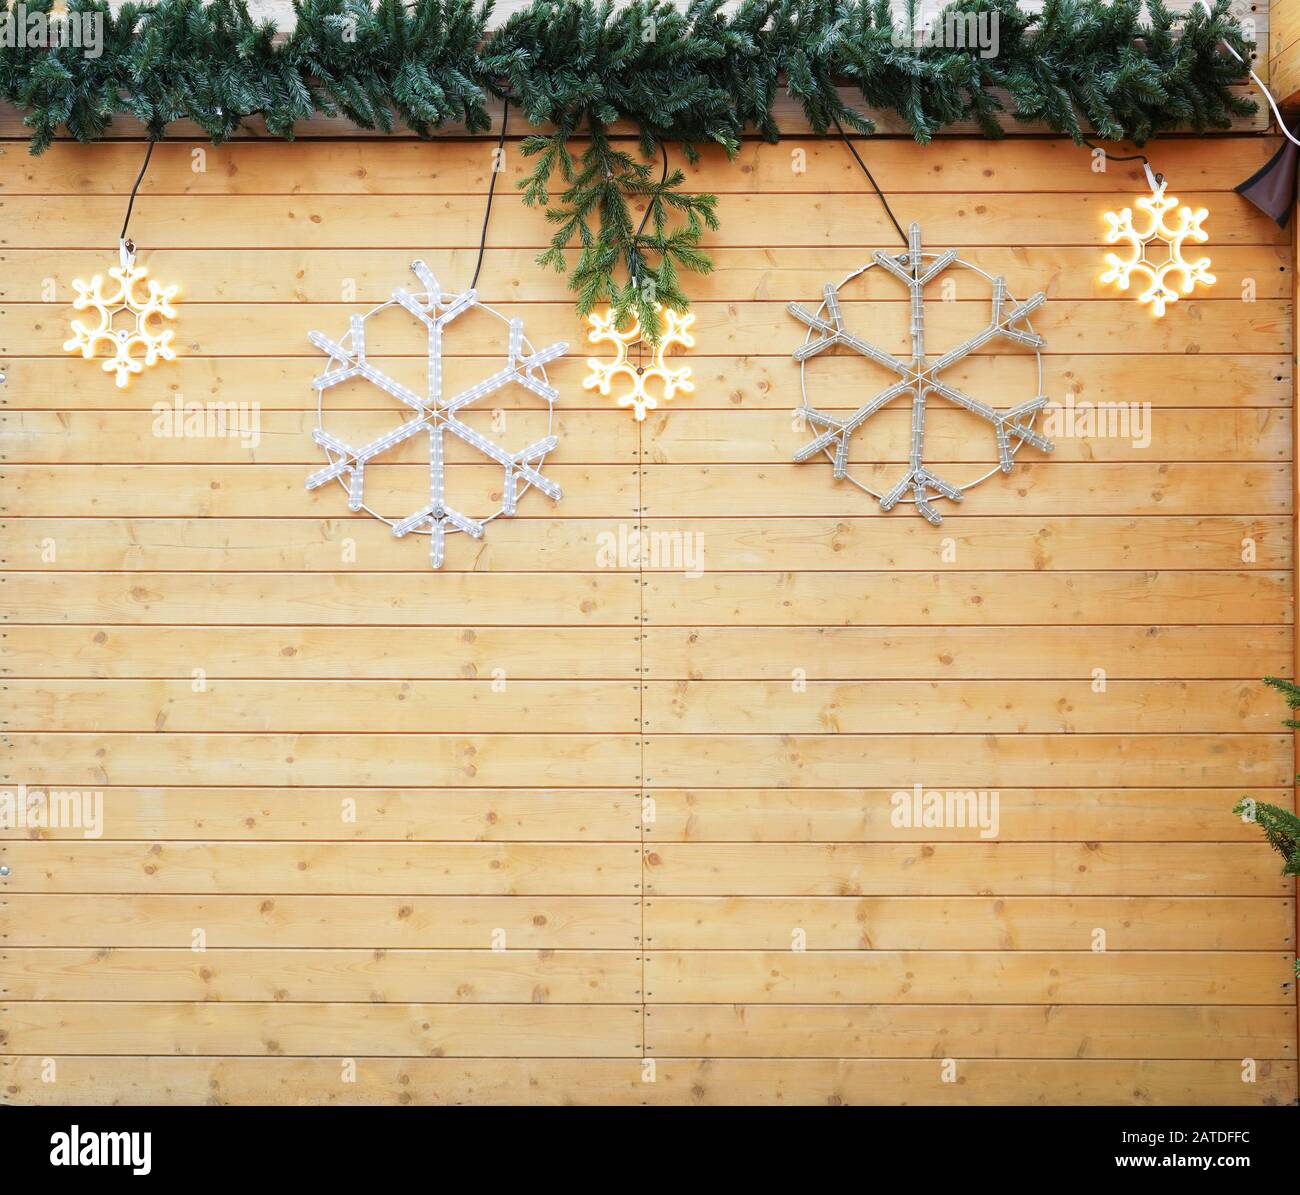 Christmas background with decorative elements Stock Photo